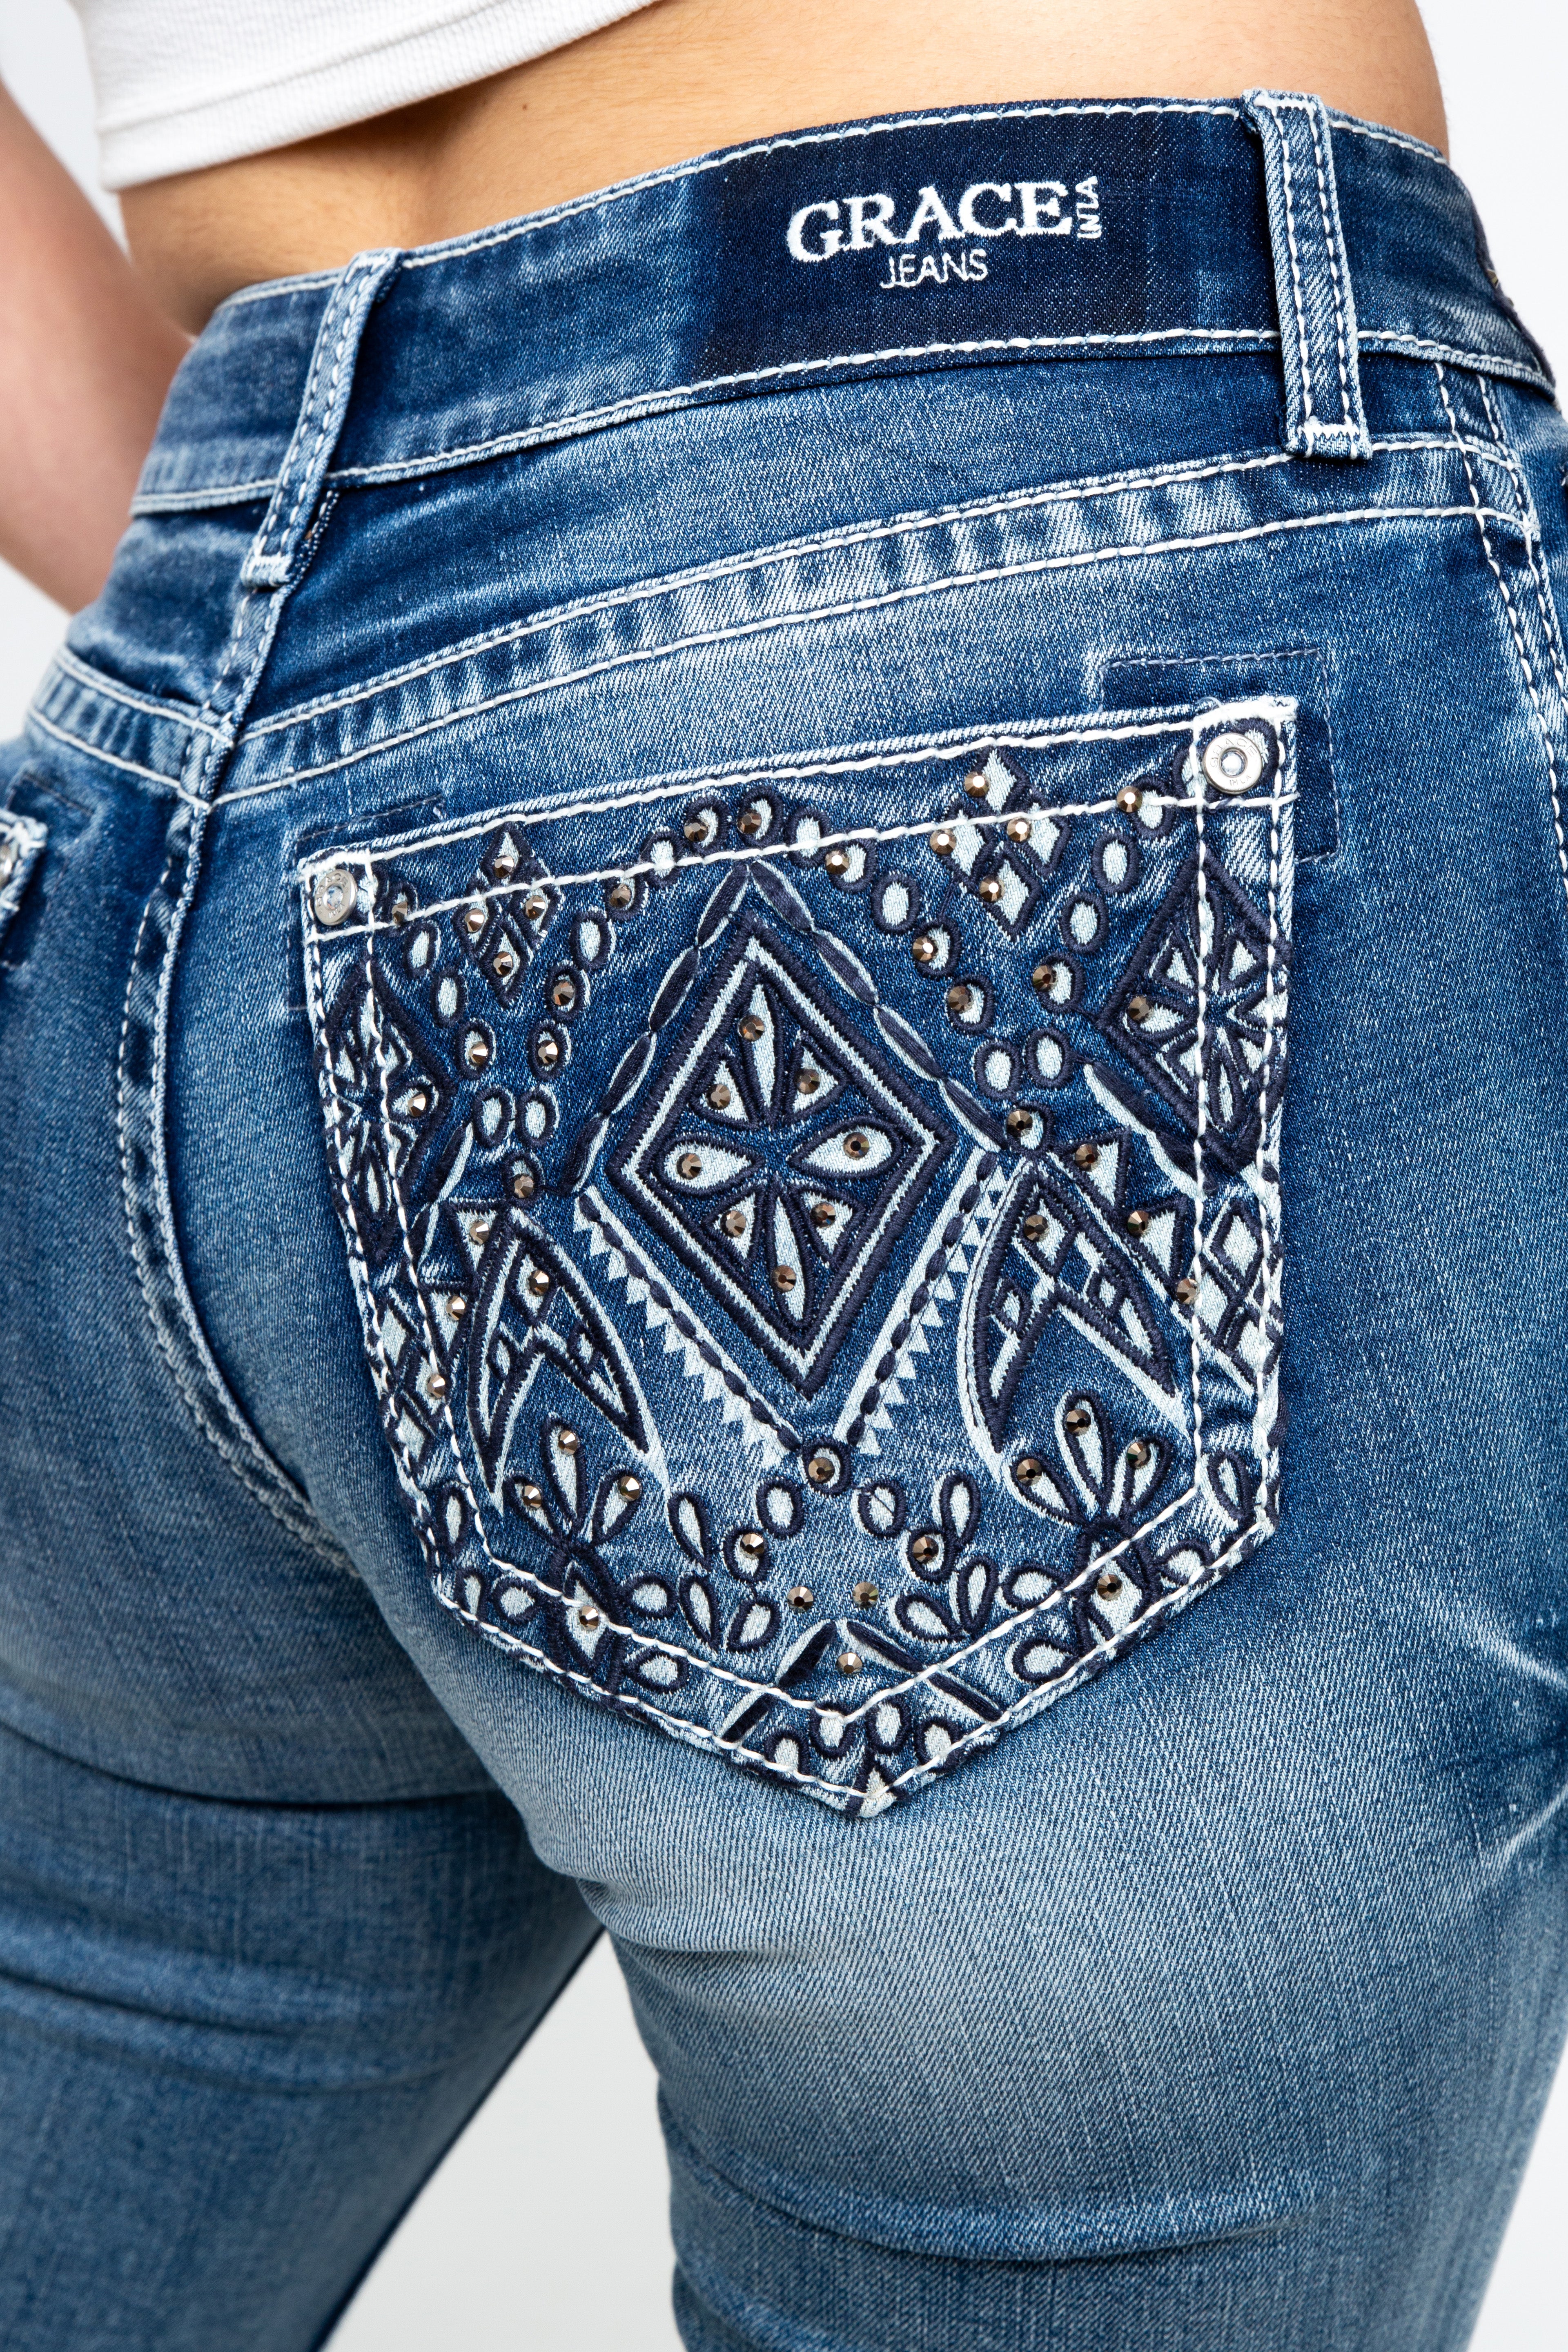 embellished jeans - embellish jeans - grace in la bootcut jeans